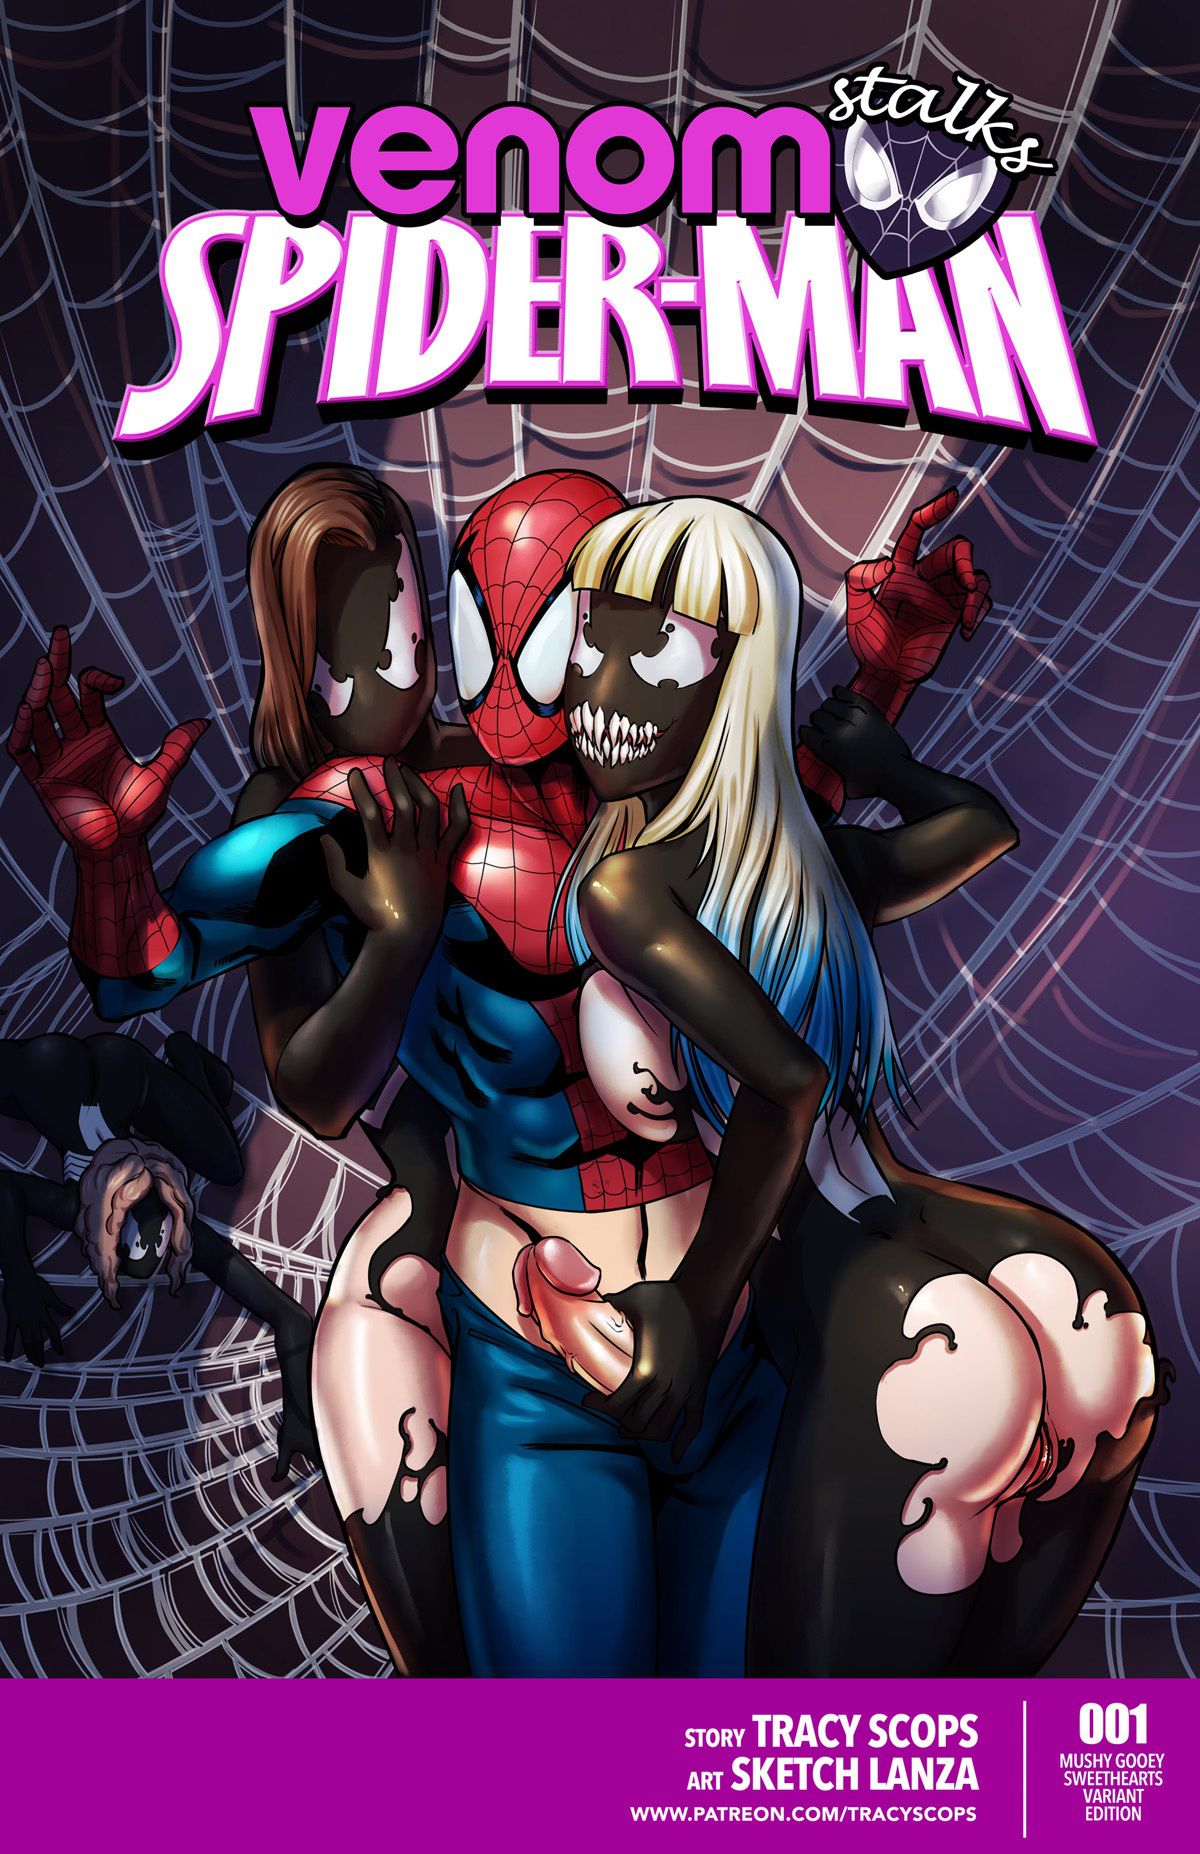 Spiderman venom porn comics